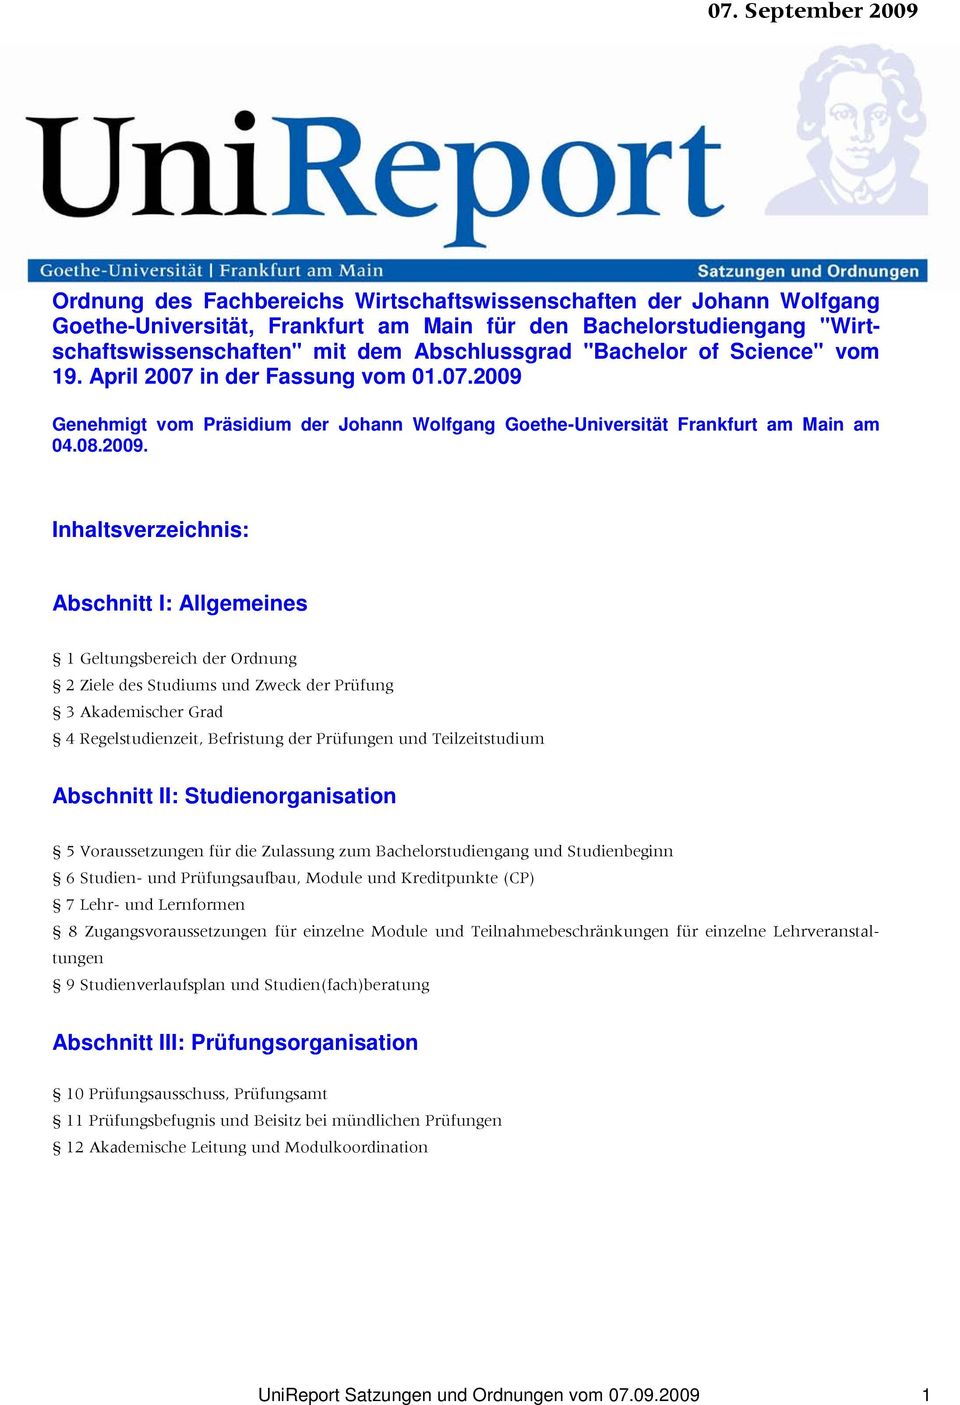 Genehmigt vom Präsidium der Johann Wolfgang Goethe-Universität Frankfurt am Main am 04.08.2009.